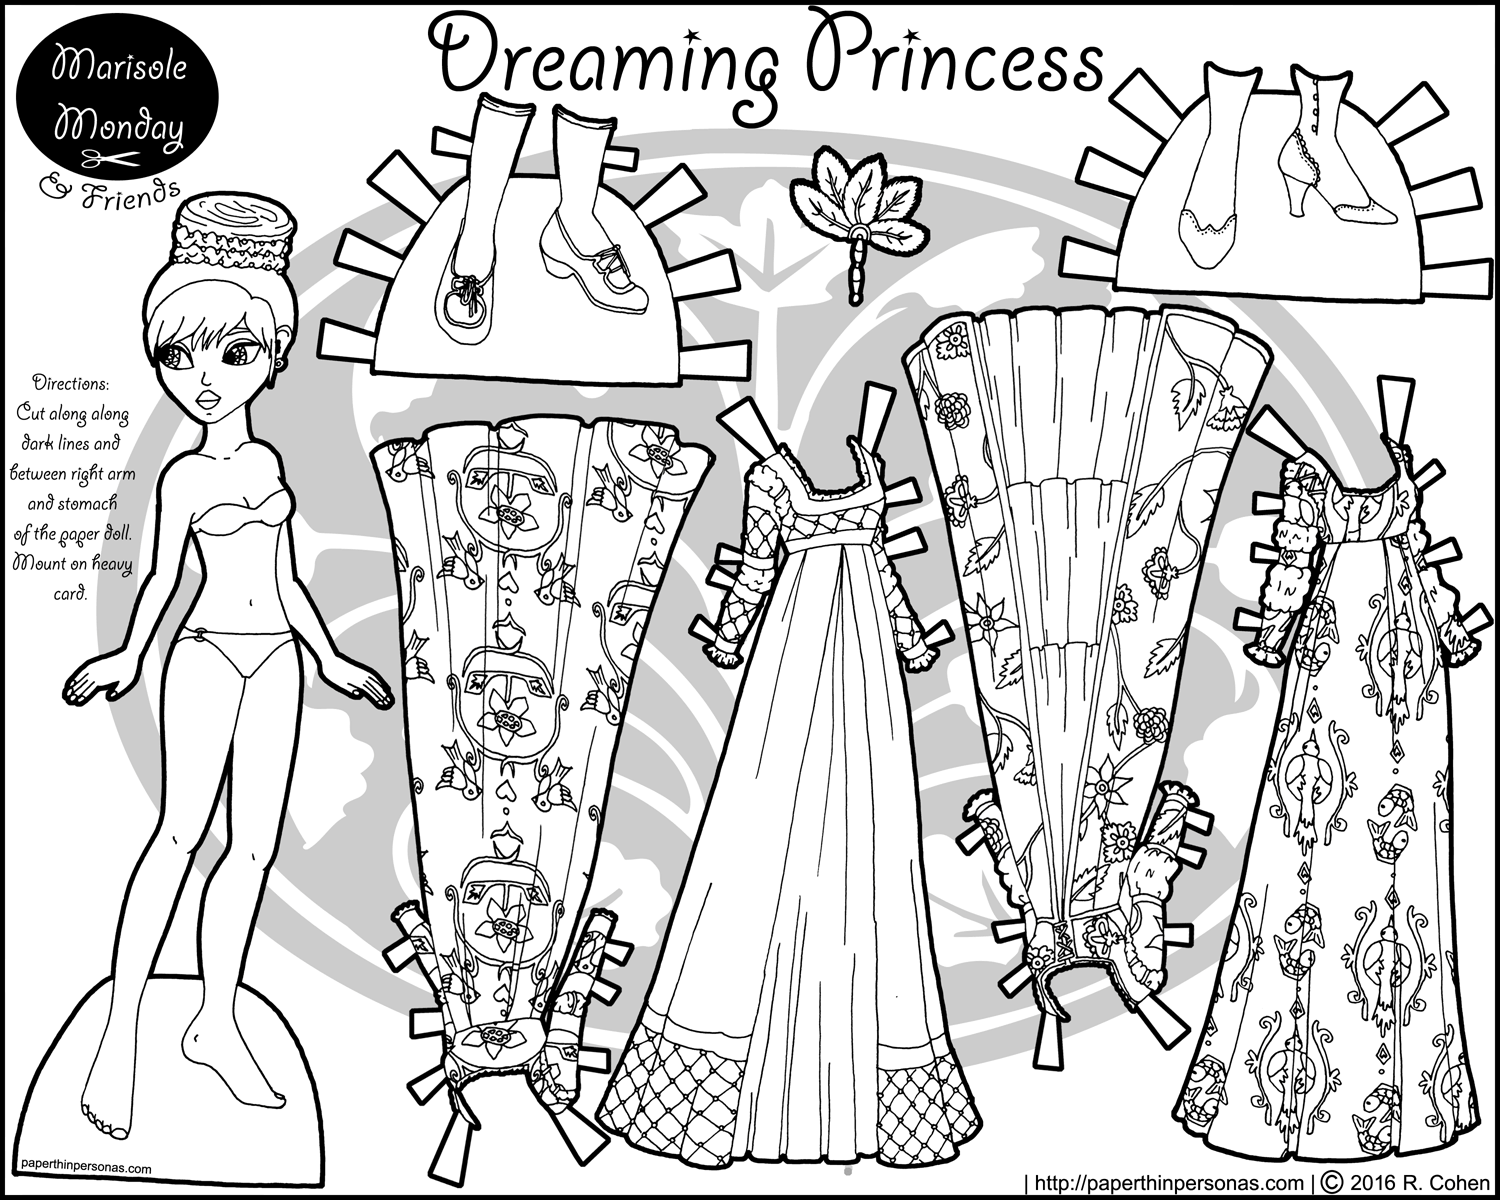 Download Dreaming Princess: A Paper Doll Princess Coloring Page